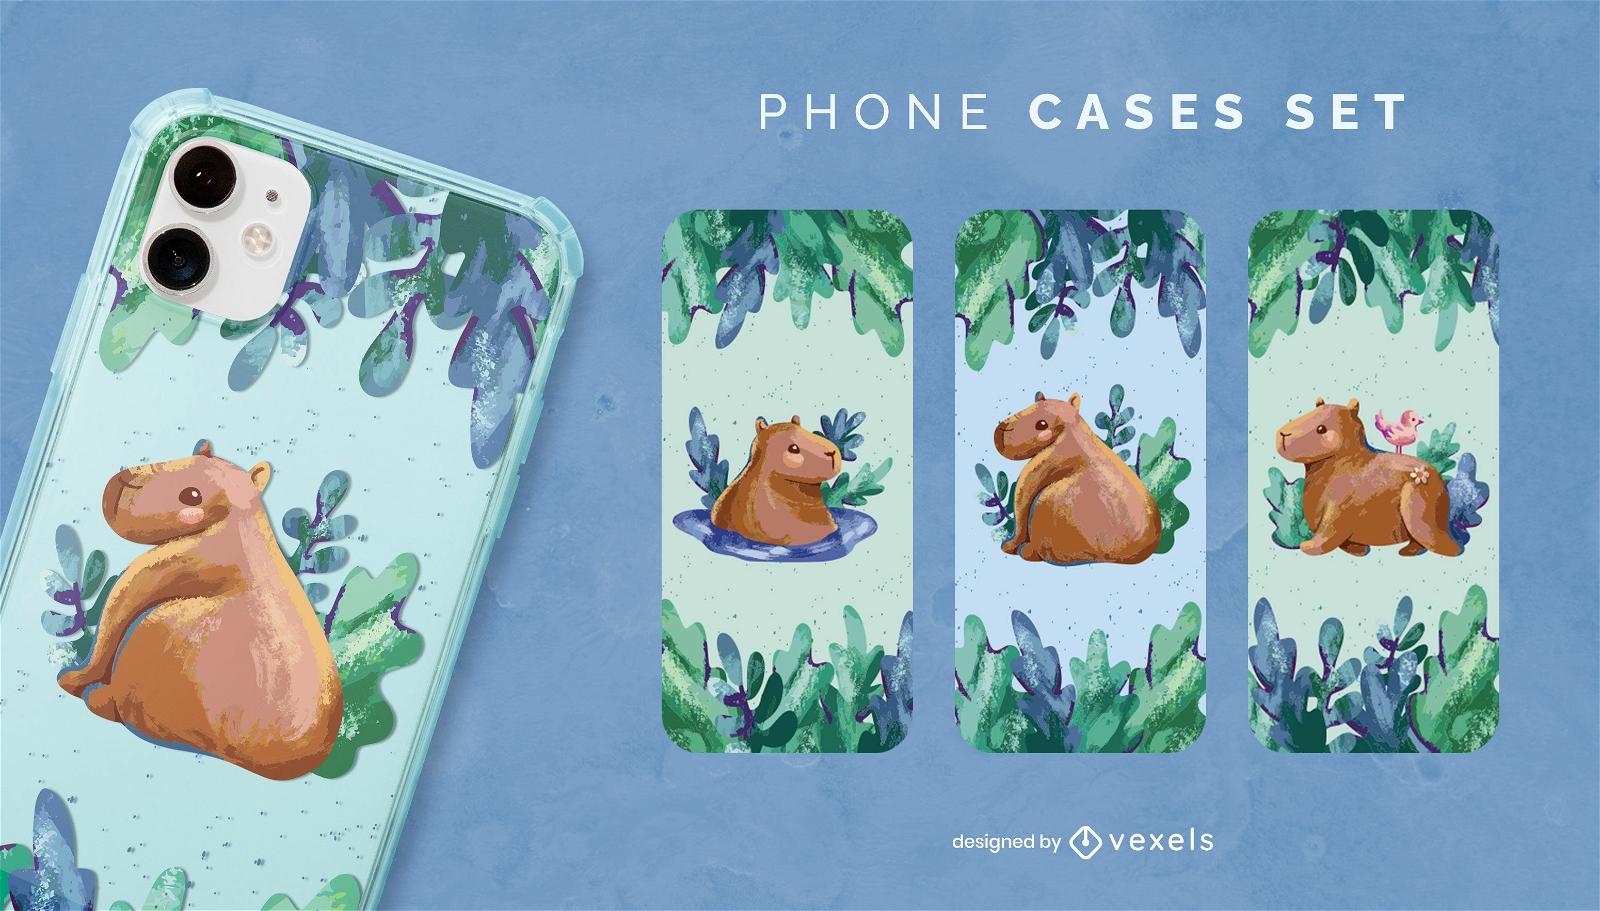 Capybara watercolor phone cases set